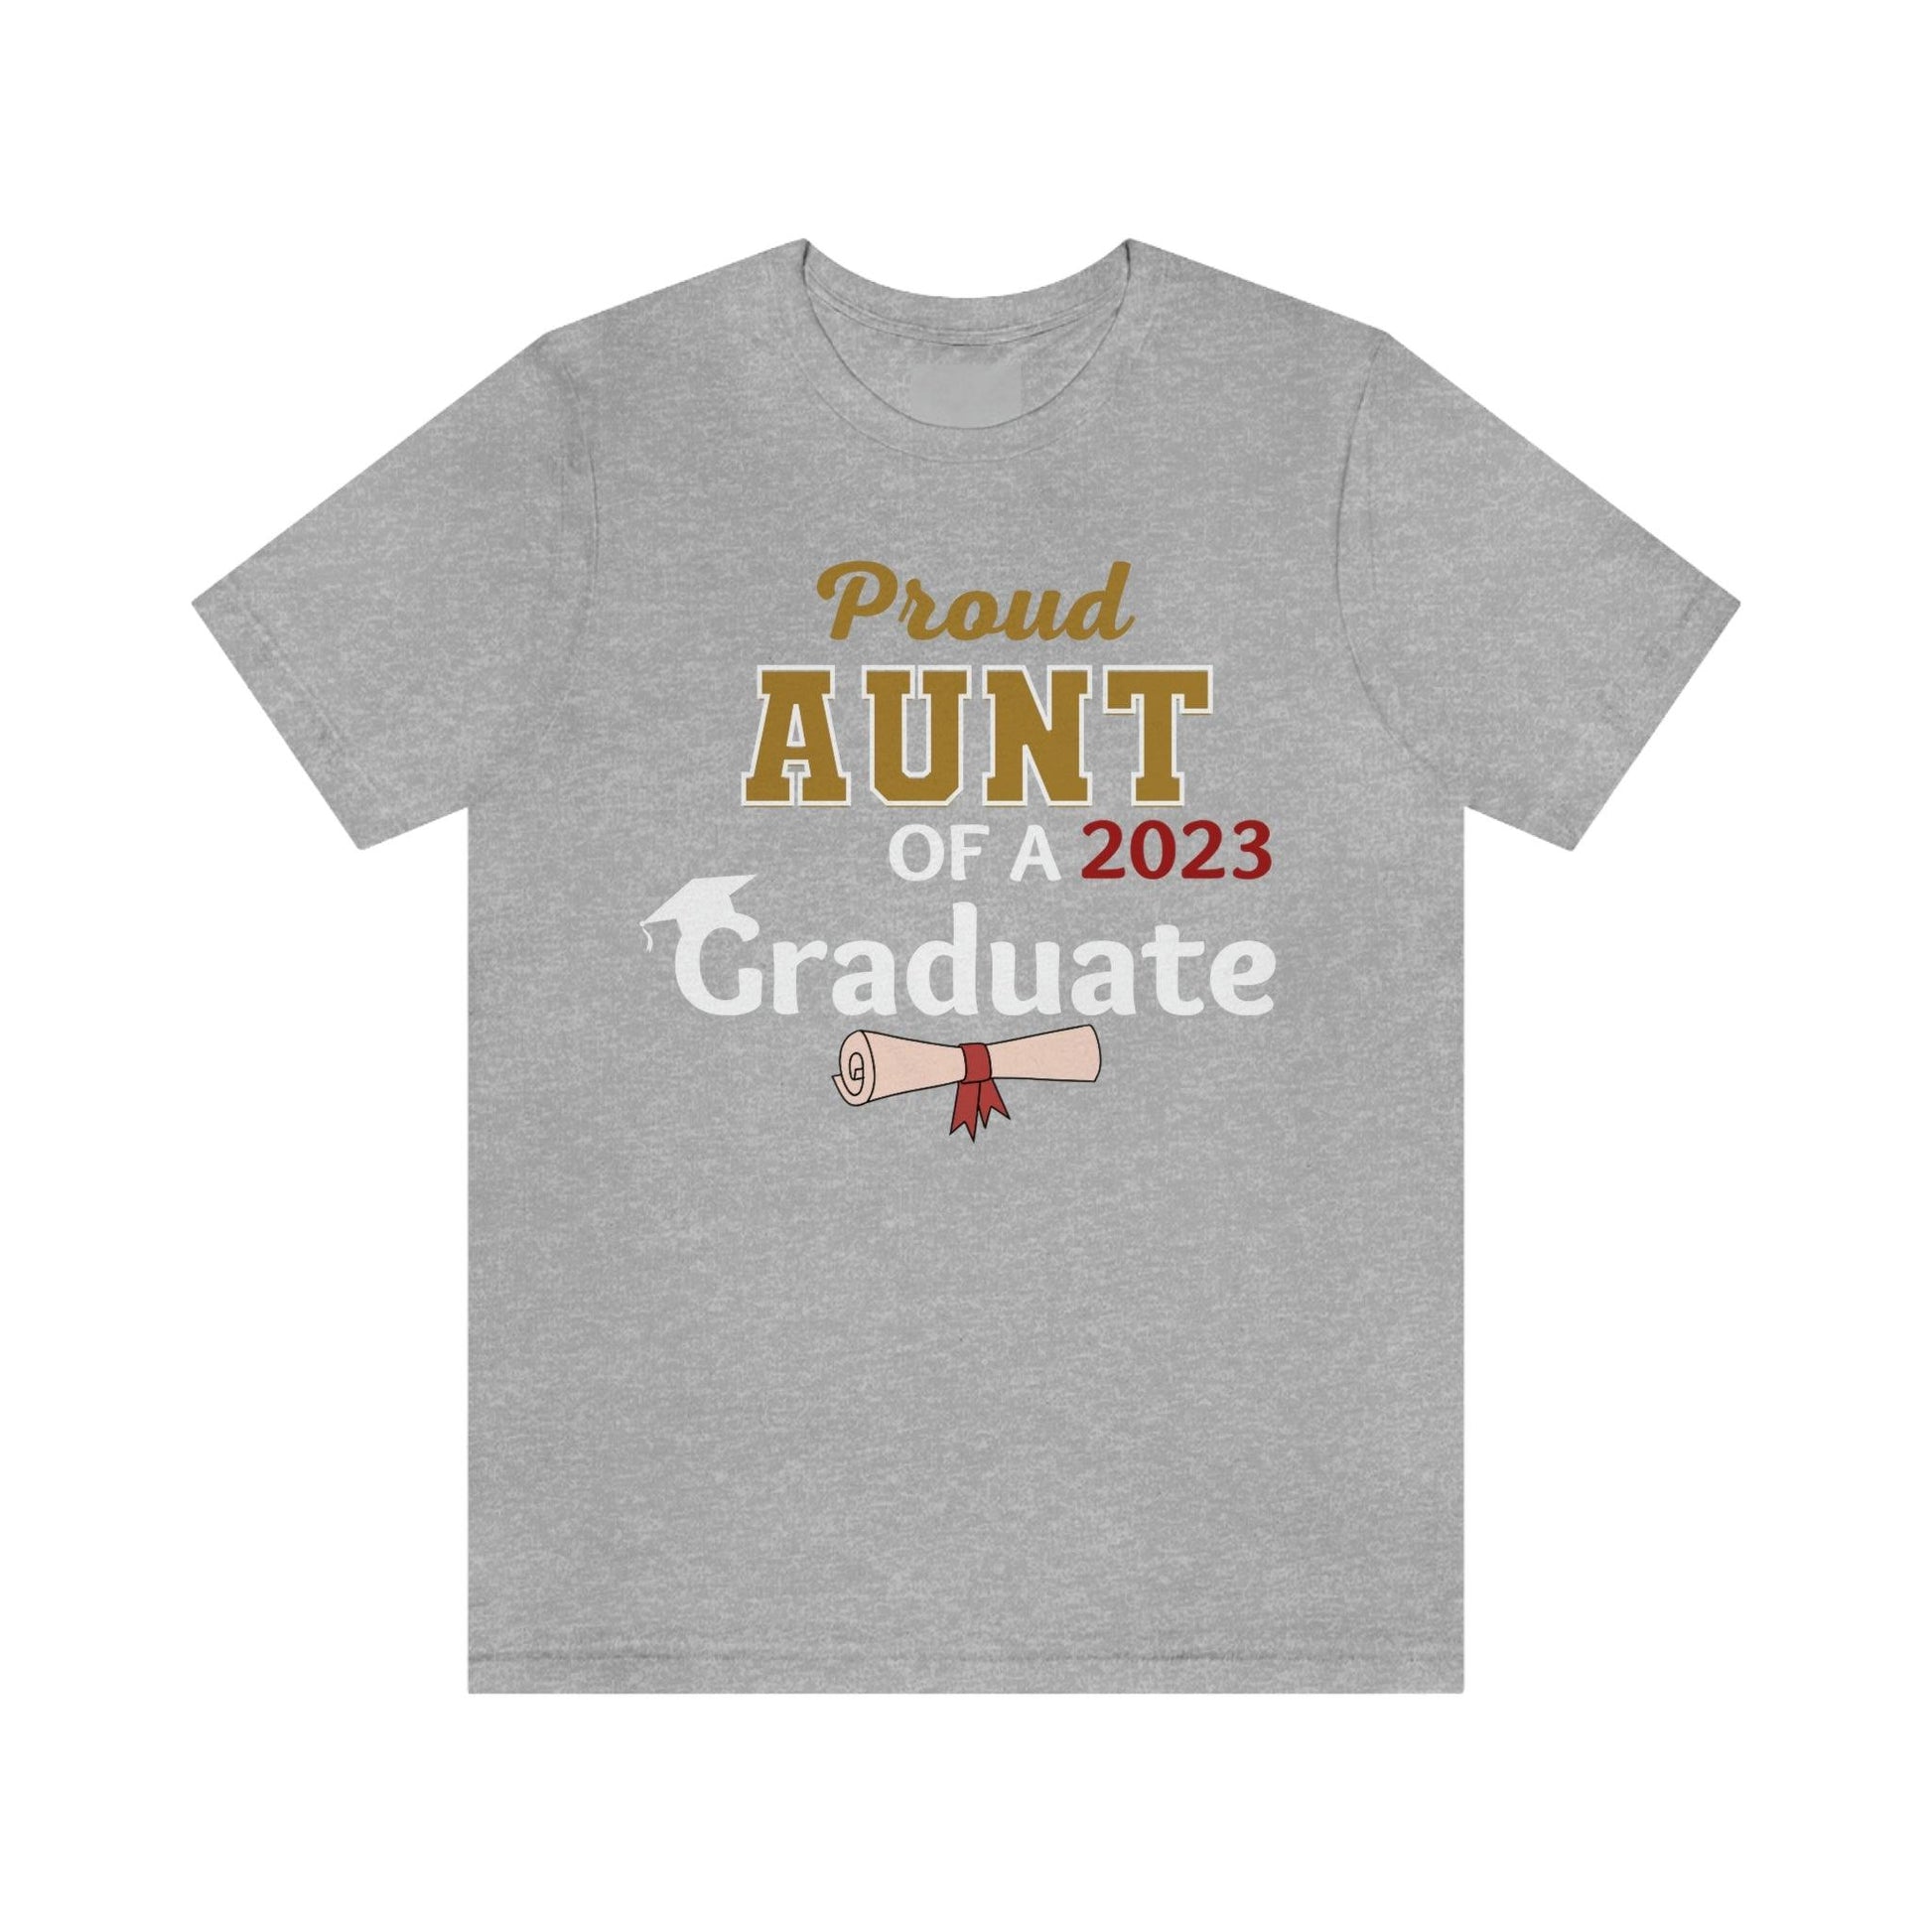 Proud Aunt of a Graduate shirt - Graduation shirt - Graduation gift - Giftsmojo